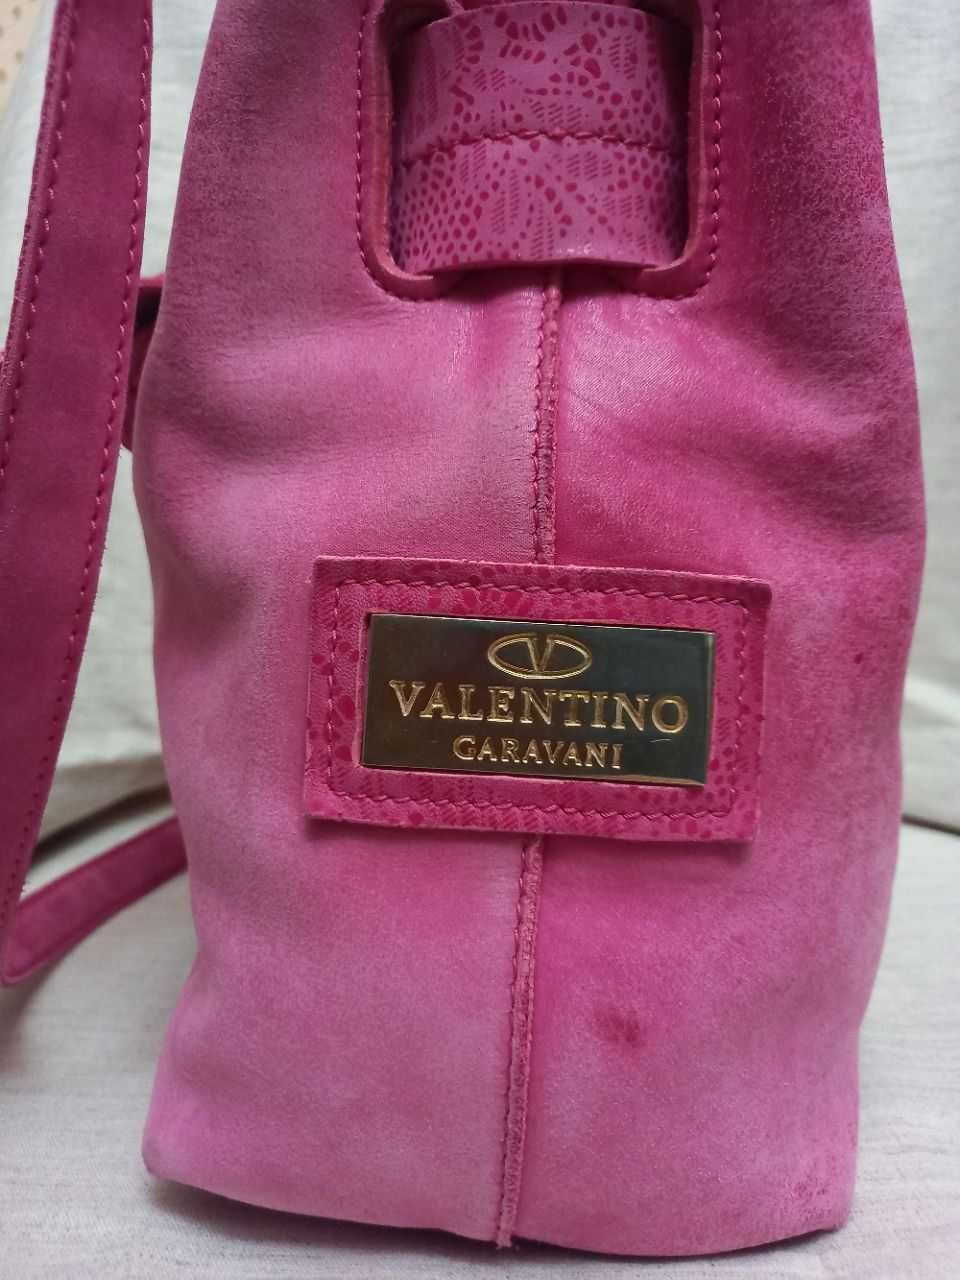 Valentino Garavani Итальянская сумка цвета фуксии